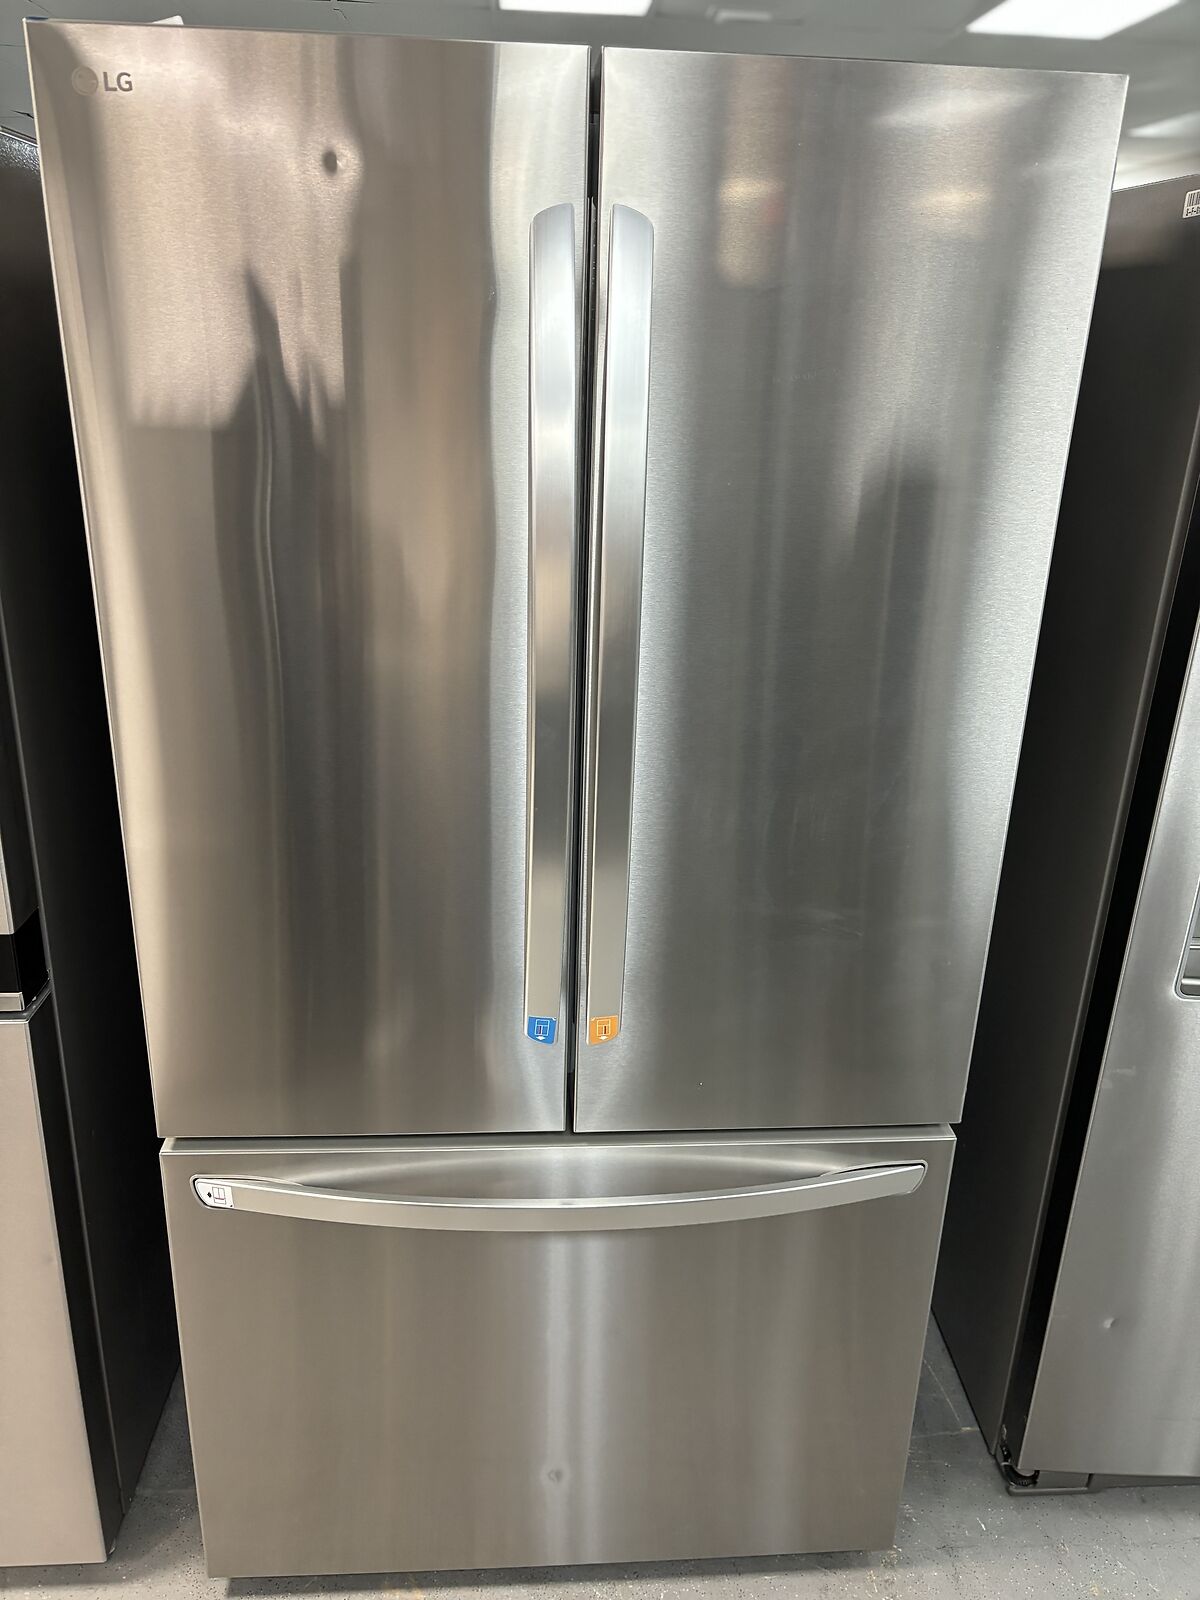 Lg Electronics - French Door (Refrigerator) - LRFLC2706S